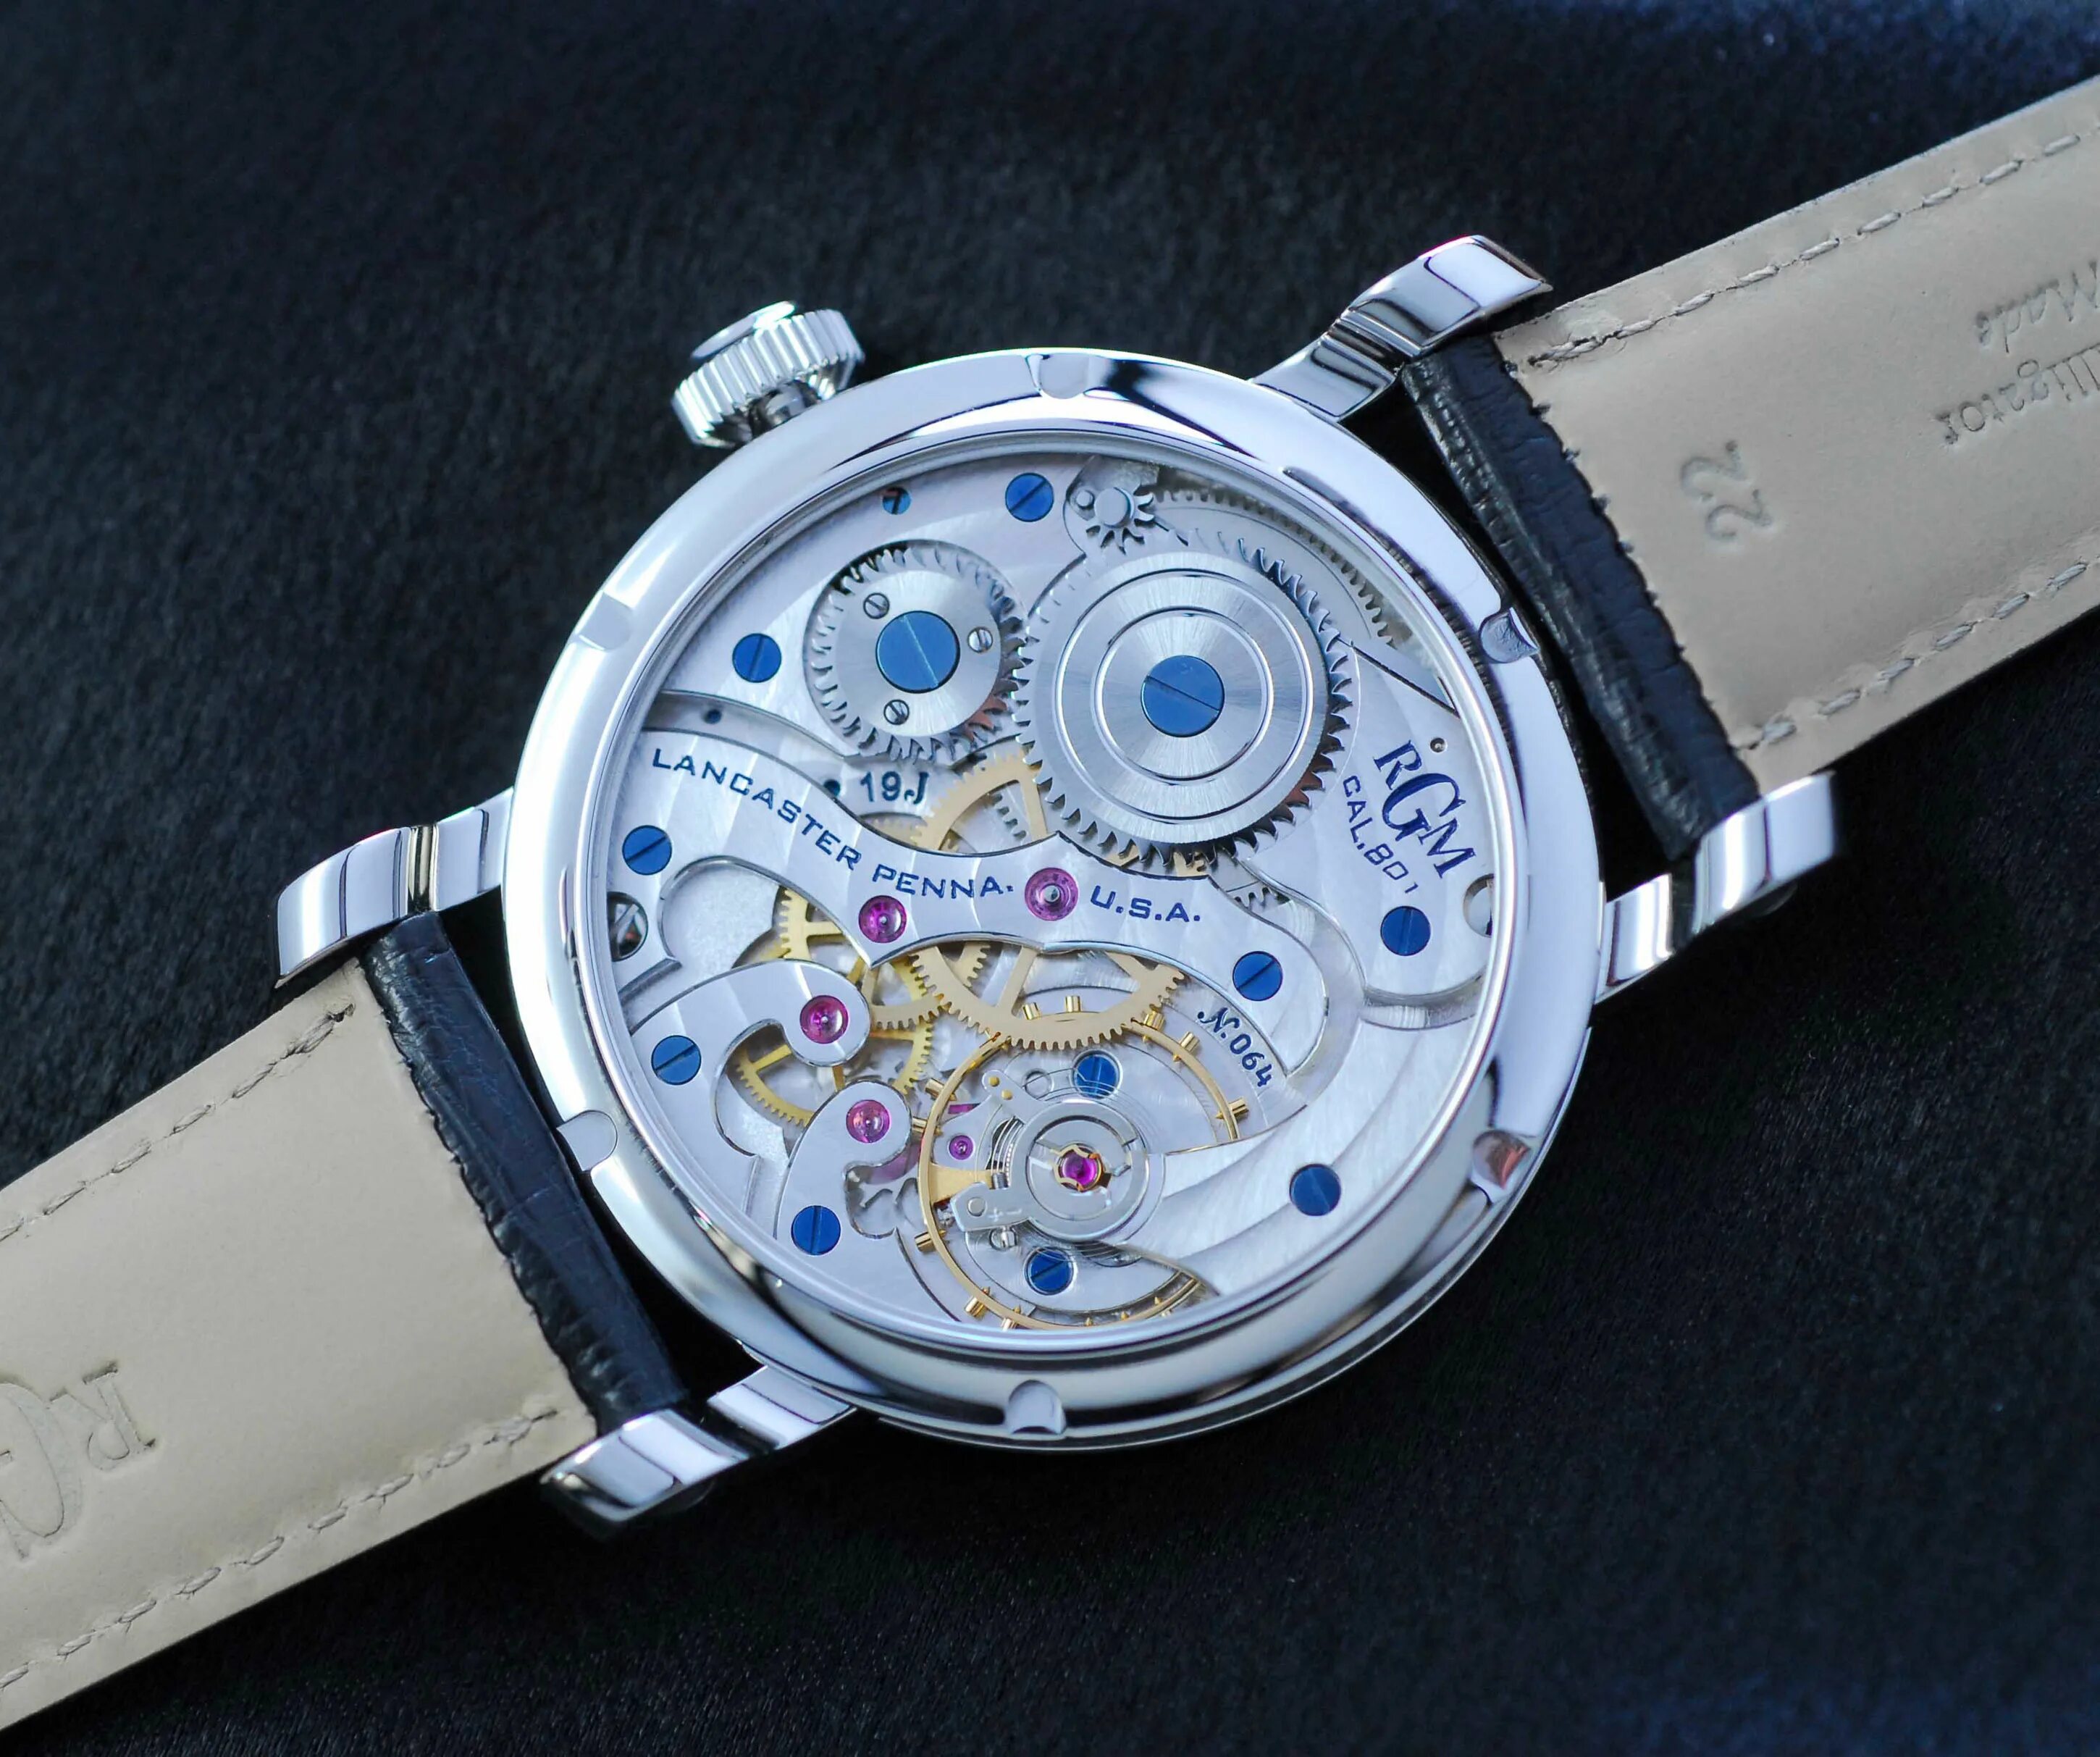 Ps часами. Перлаж часов. Remex 0180 Movement watch. Cartier Japan Movement. Decoration Movement.